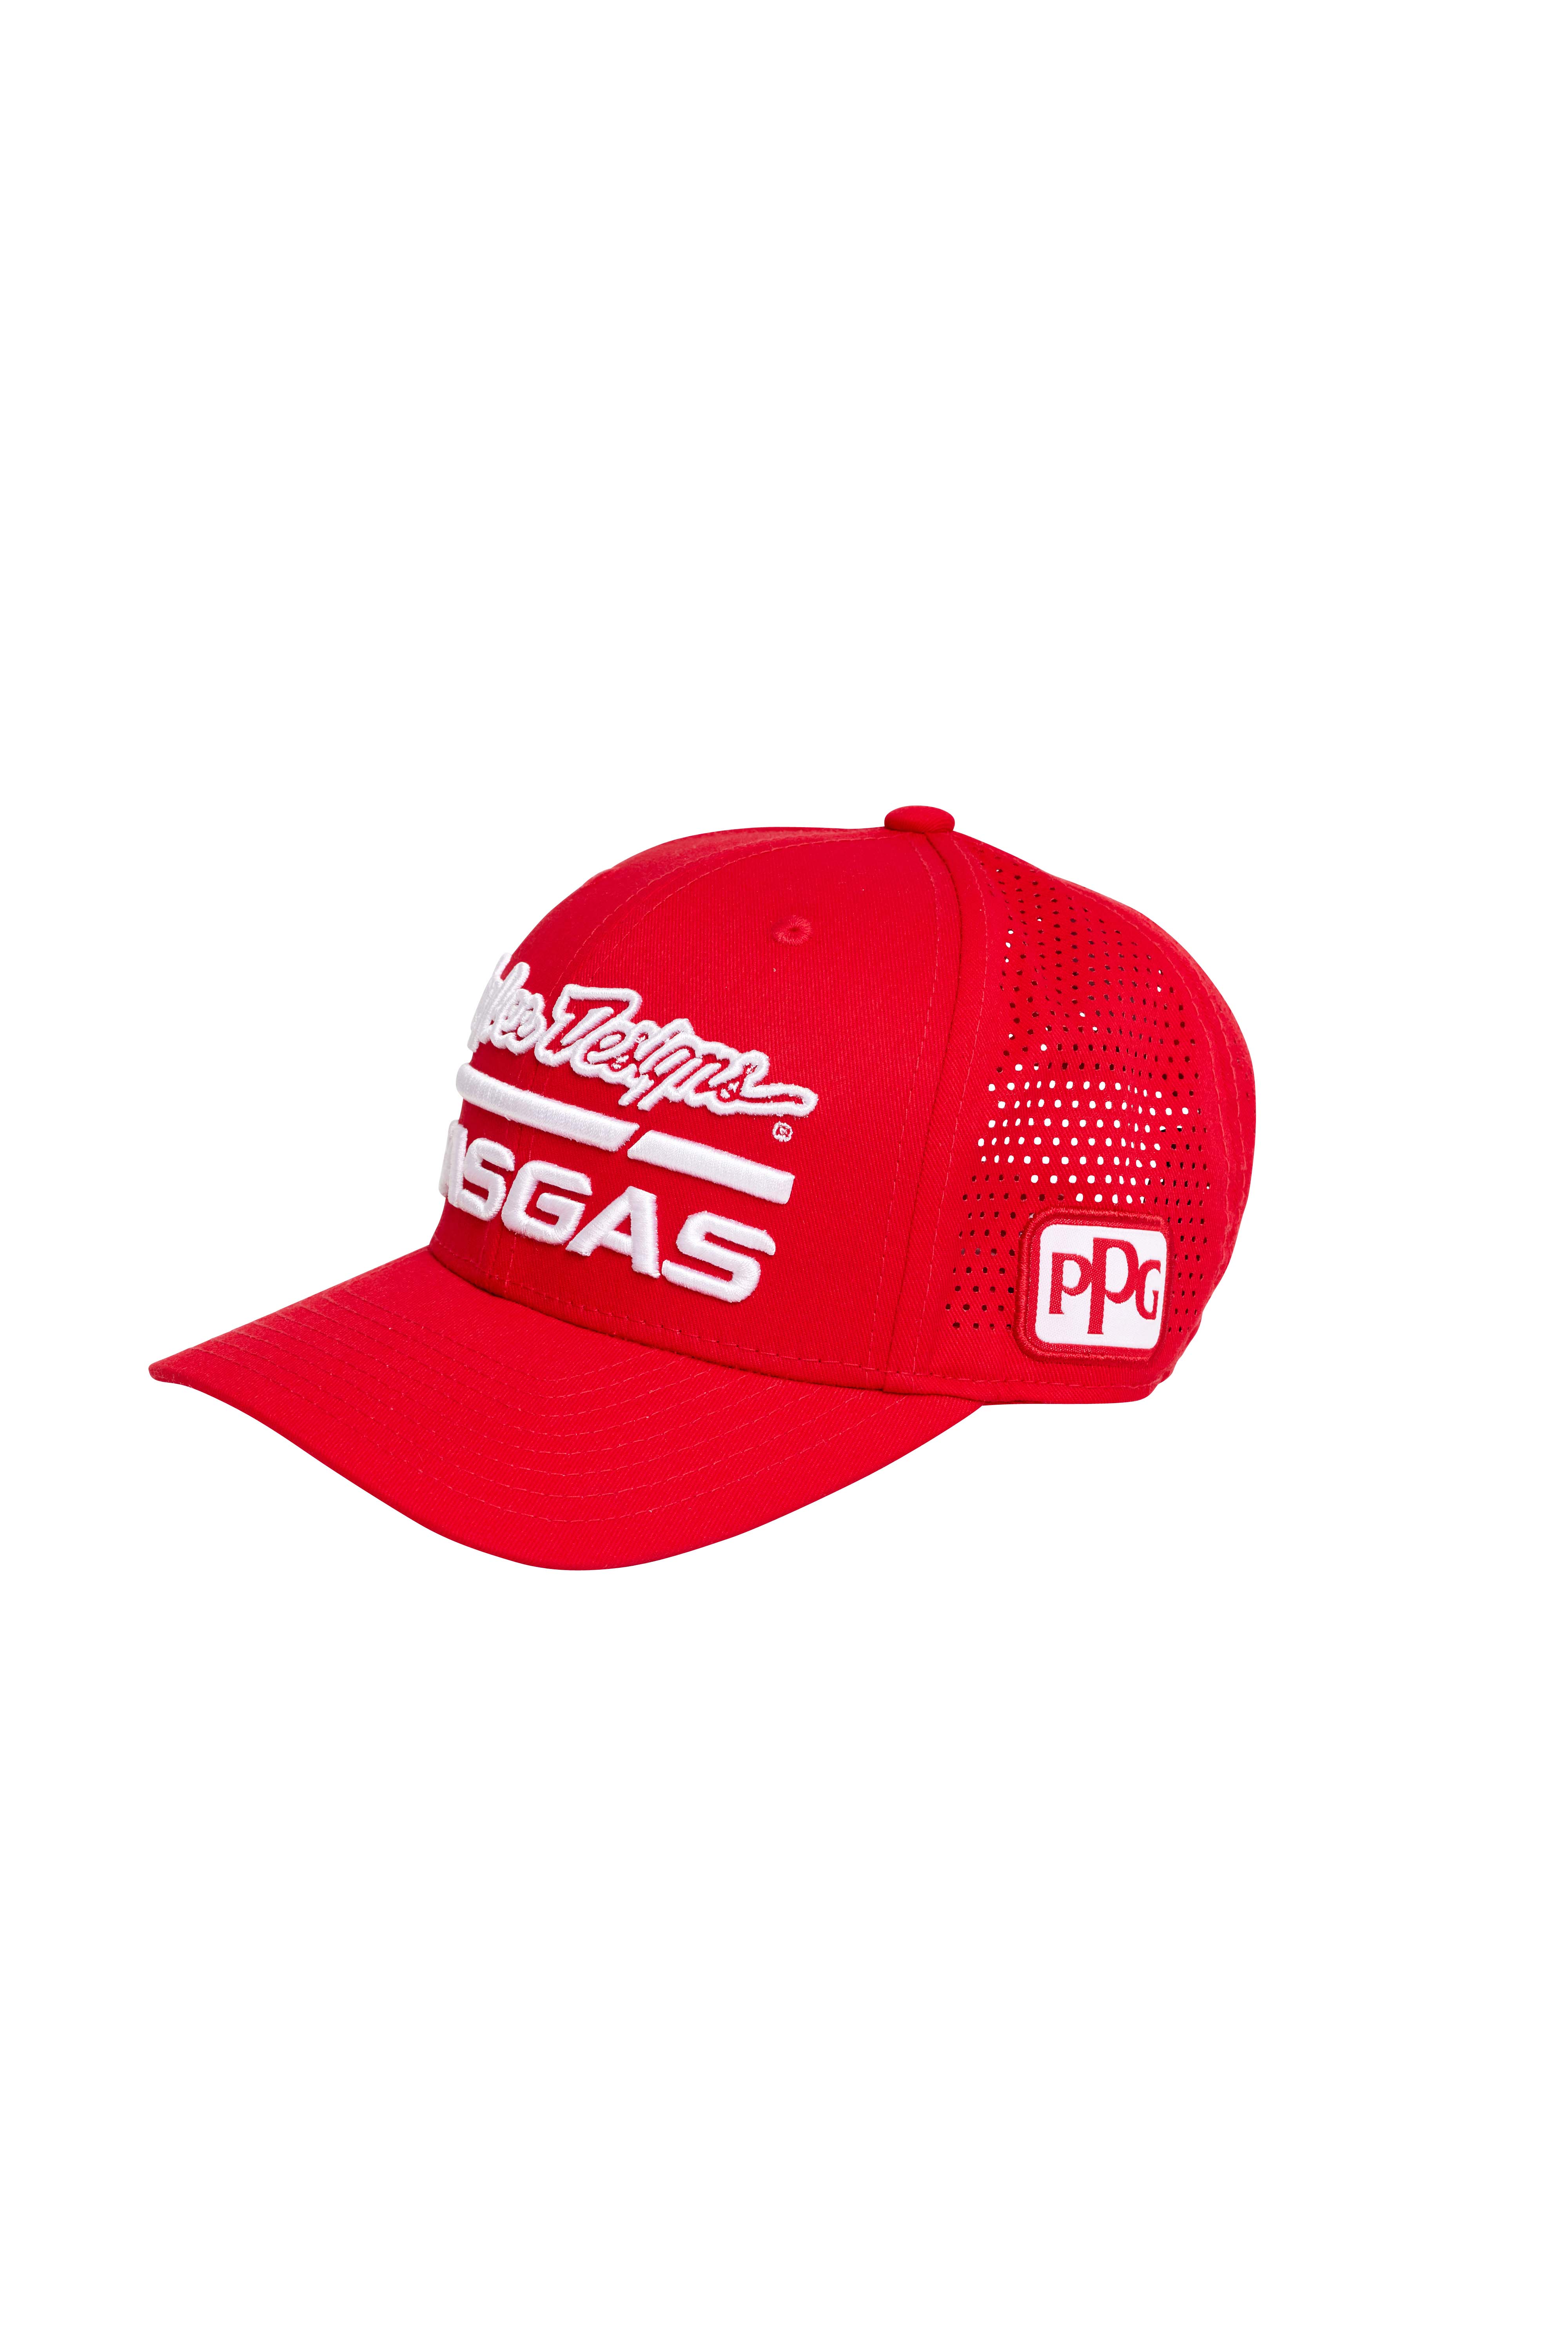 TLD GASGAS TEAM CURVED CAP RED